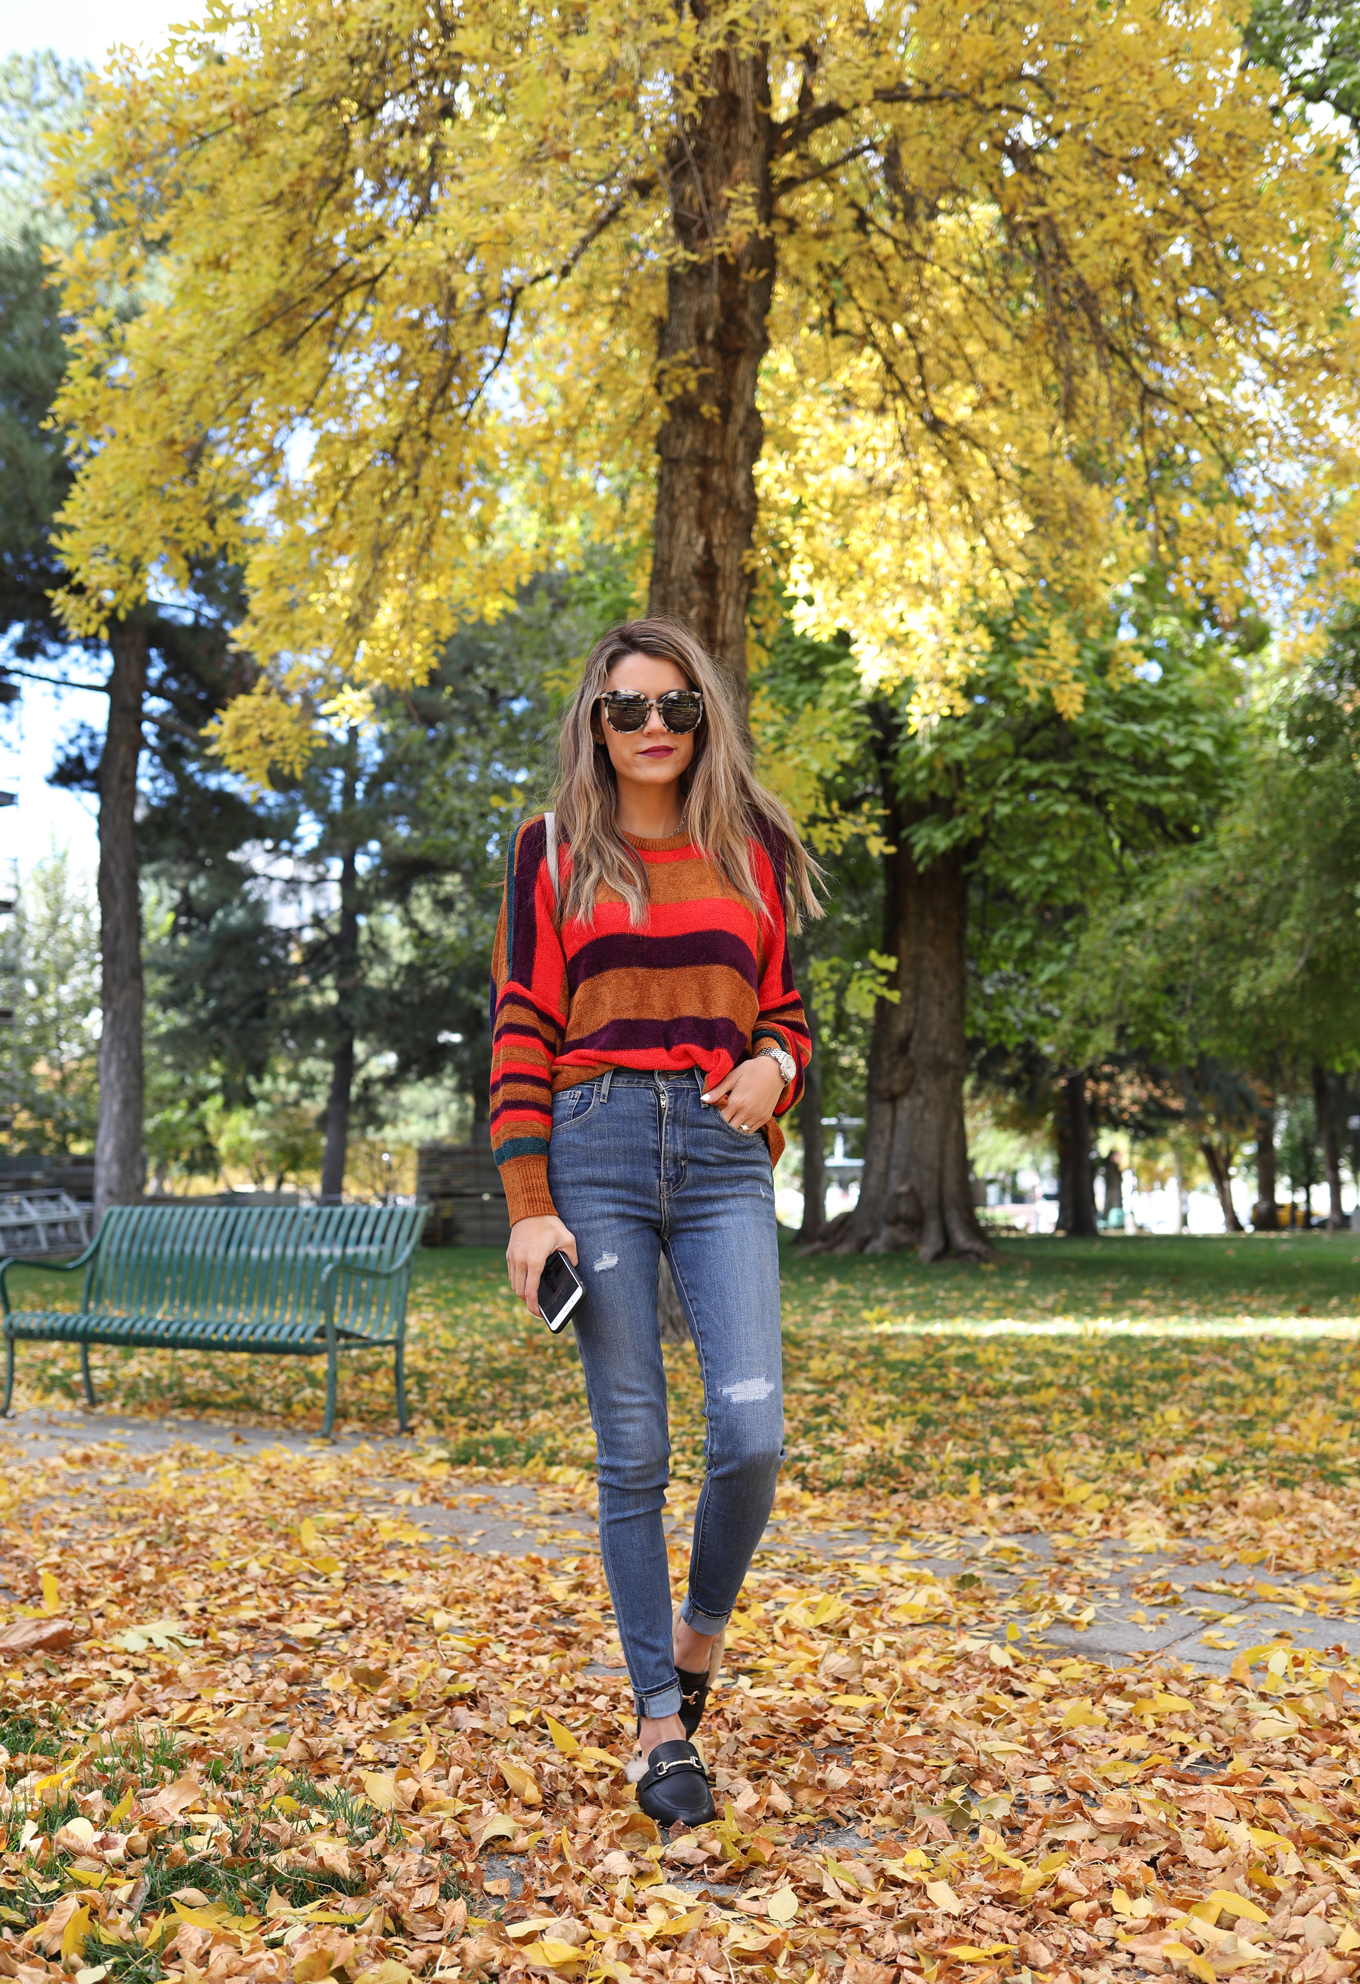 Sweaters & Stripes - Hello Fashion